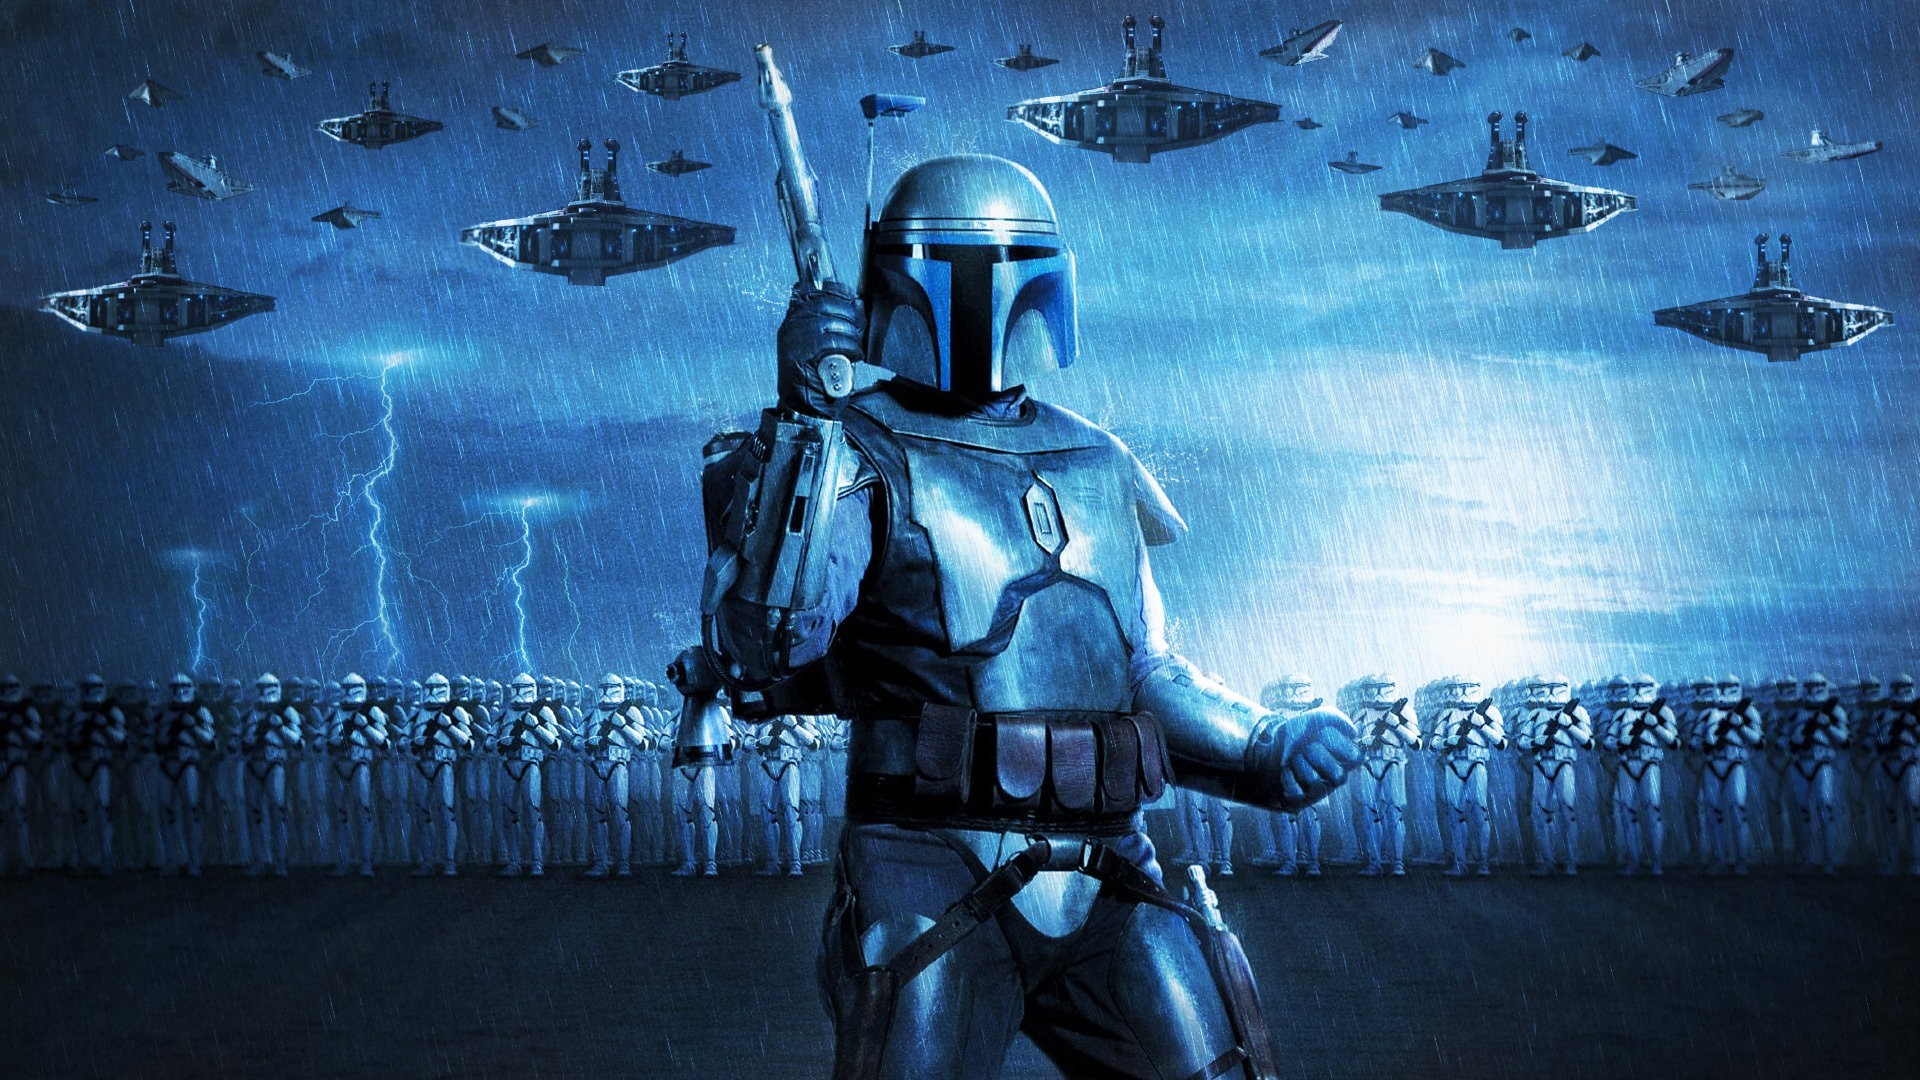 General Star Wars Jango Fett Star Wars Episode II – Attack of the Clones